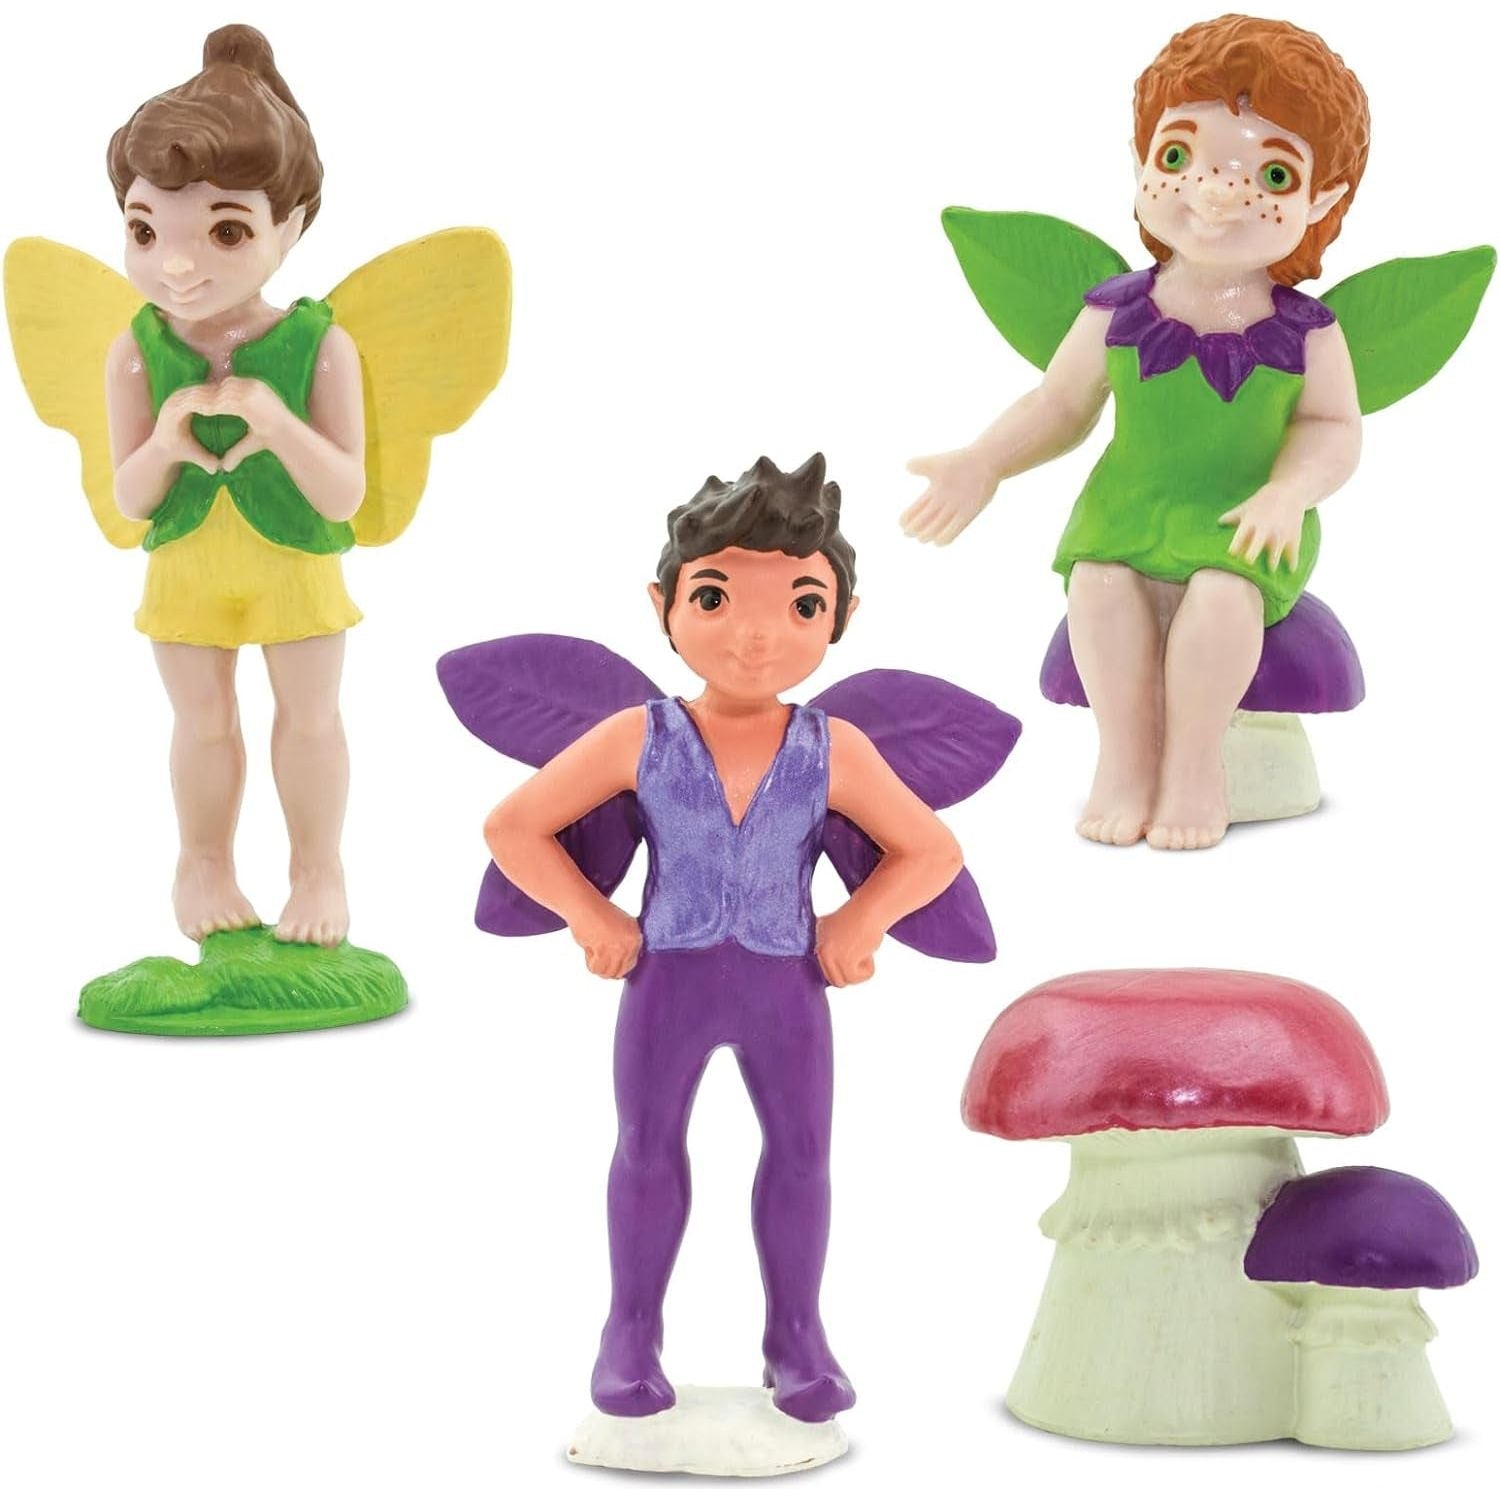 Friendly Fairies Miniature Figurines